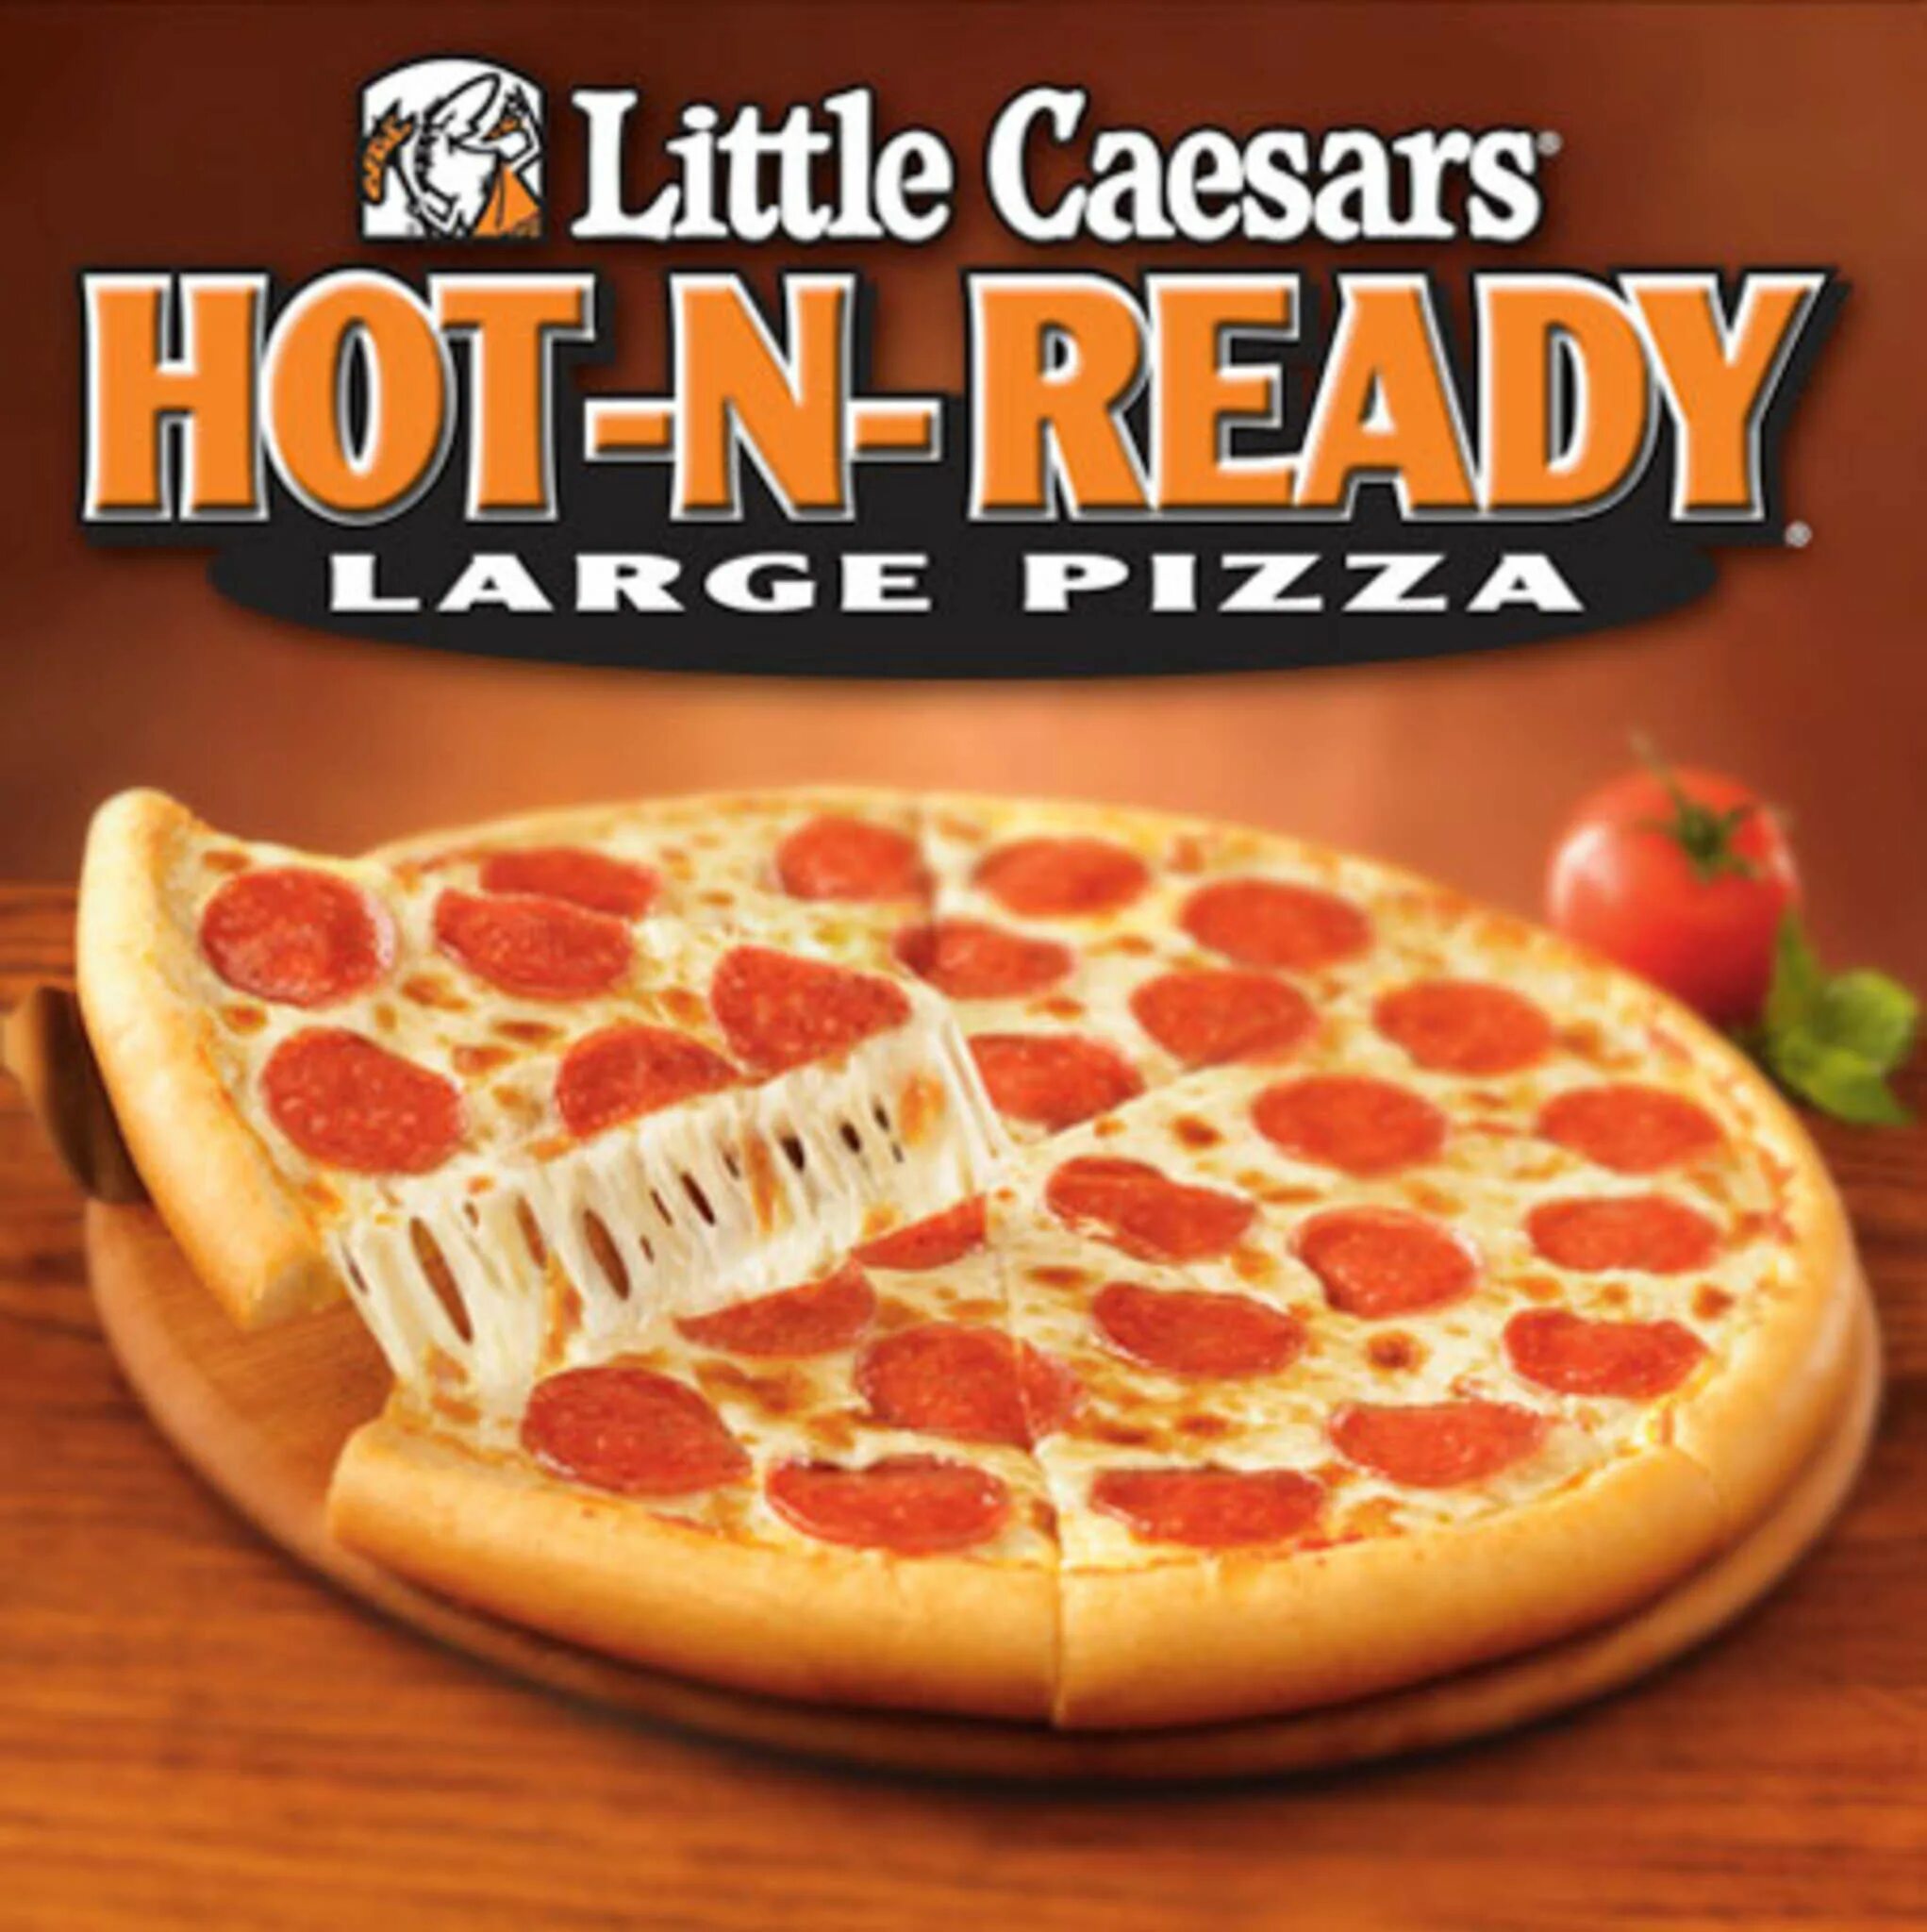 Pizza ready мод много. Little Caesars. Hot n ready пицца. Little Caesars pizza. Little Caesars hot n ready.